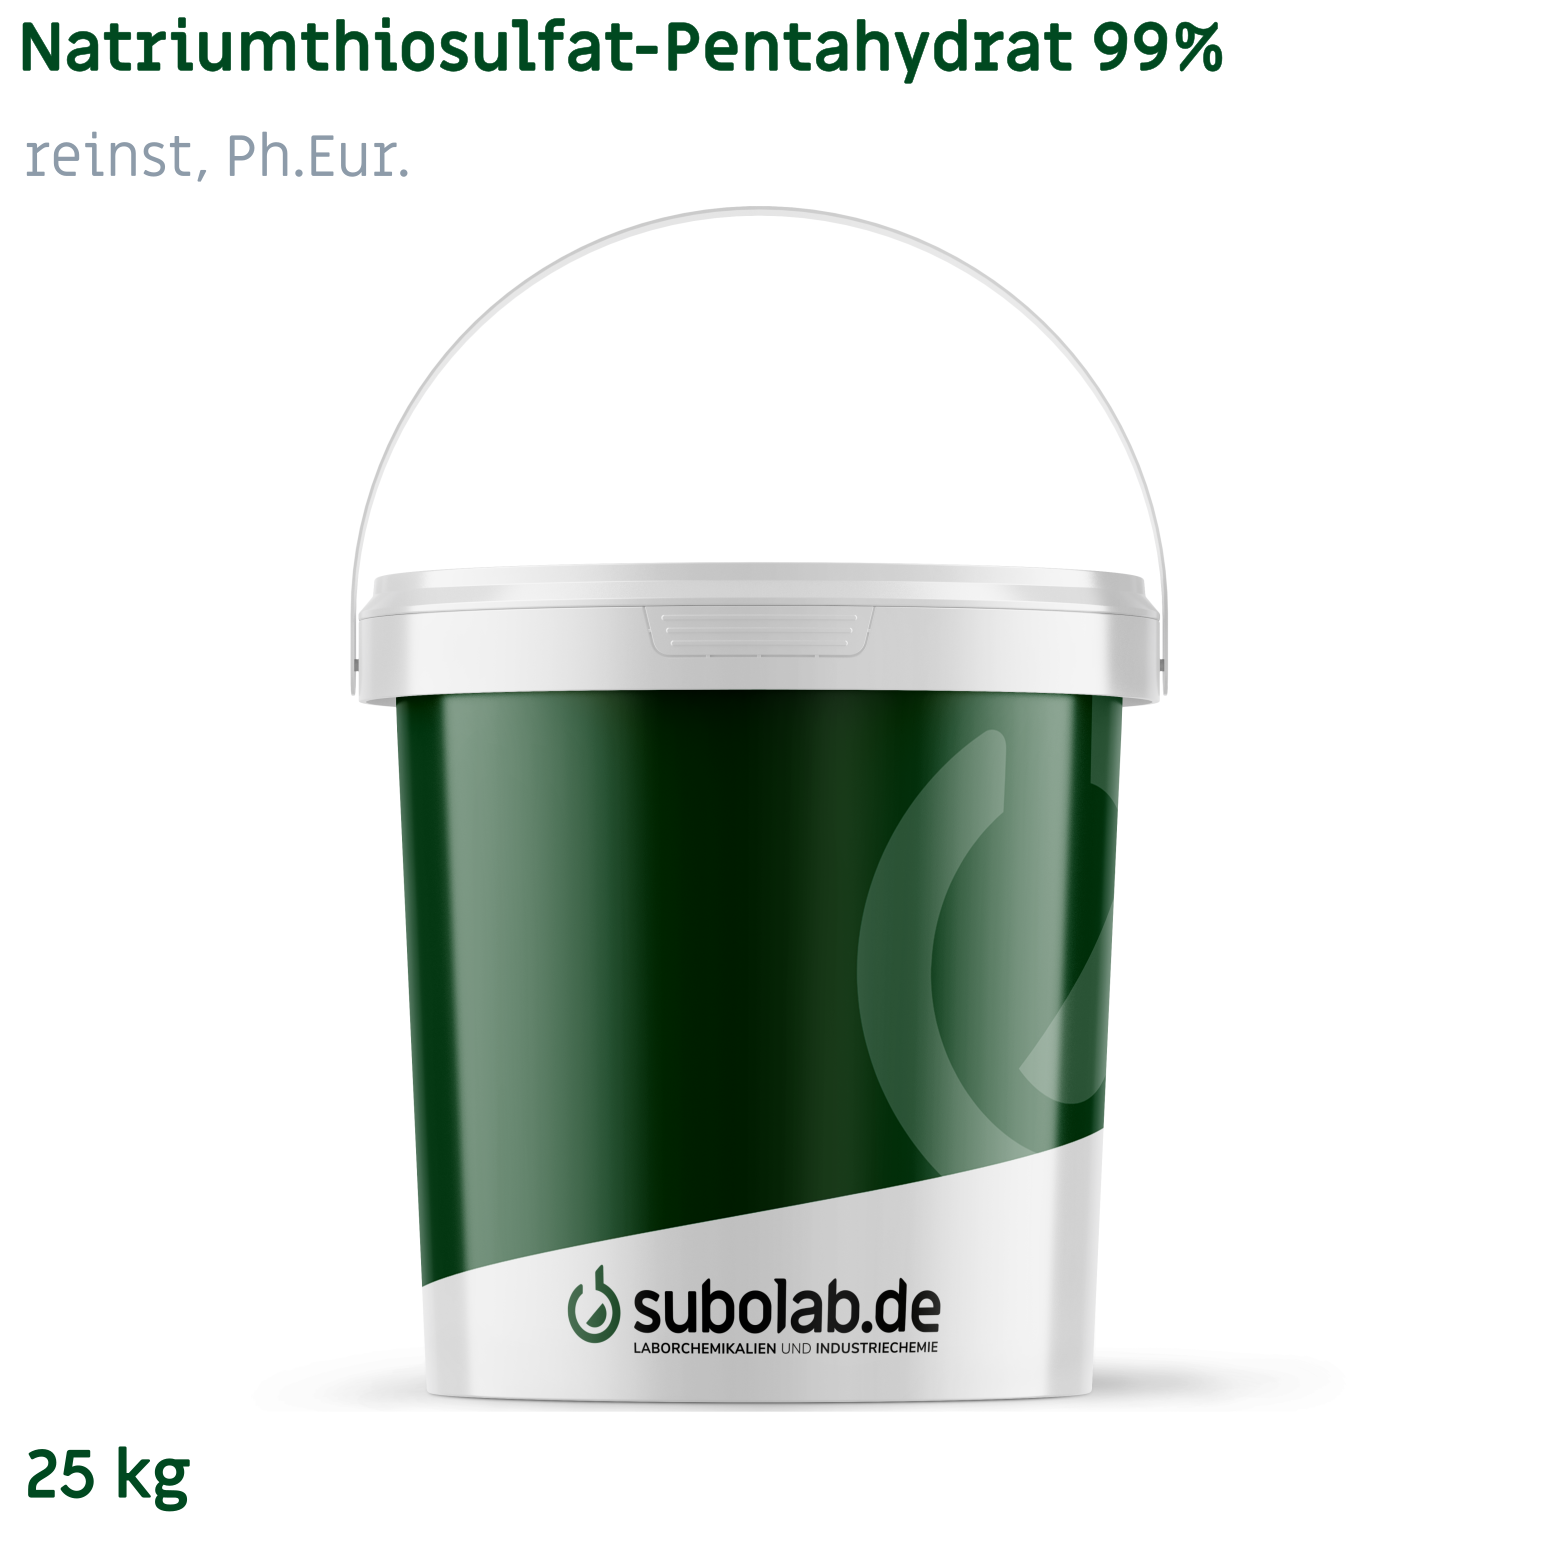 Bild von Natriumthiosulfat - Pentahydrat 99% reinst, Ph.Eur. (25 kg)